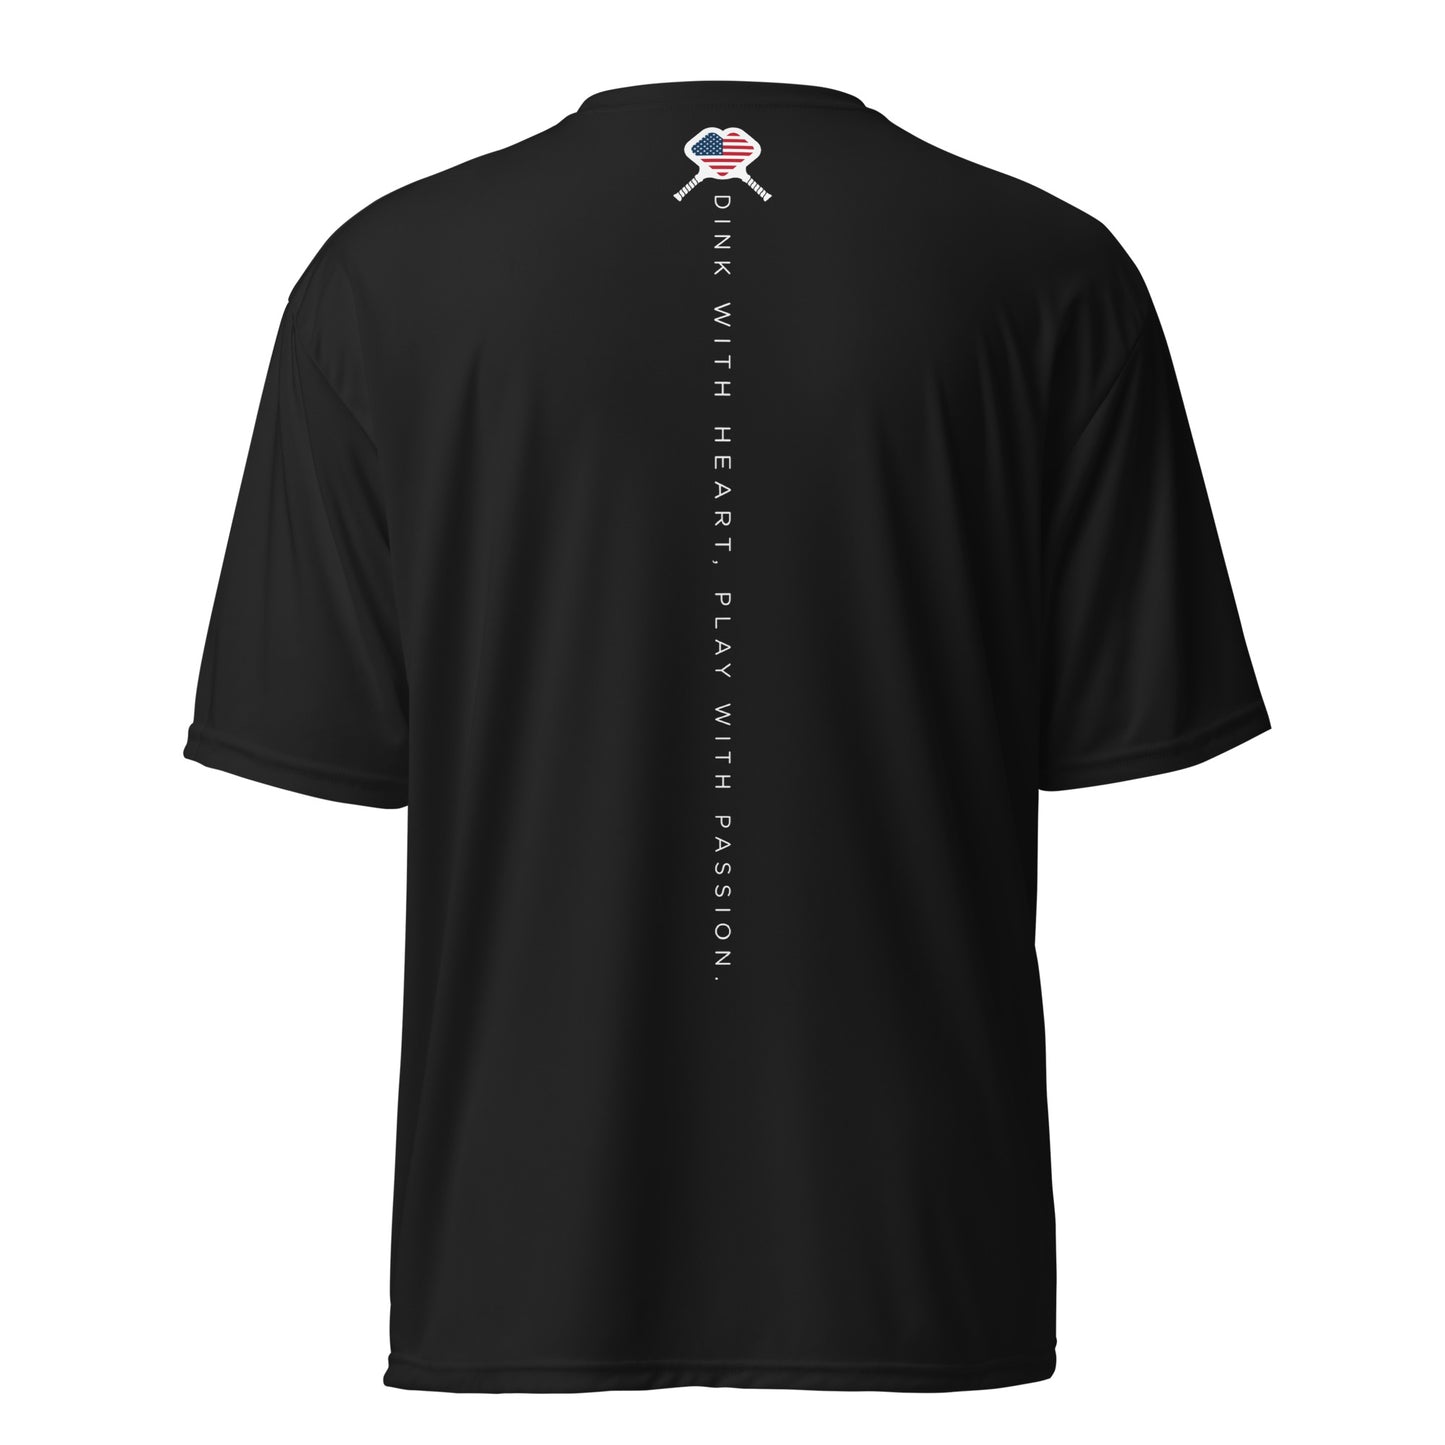 USA Unisex performance crew neck t-shirt